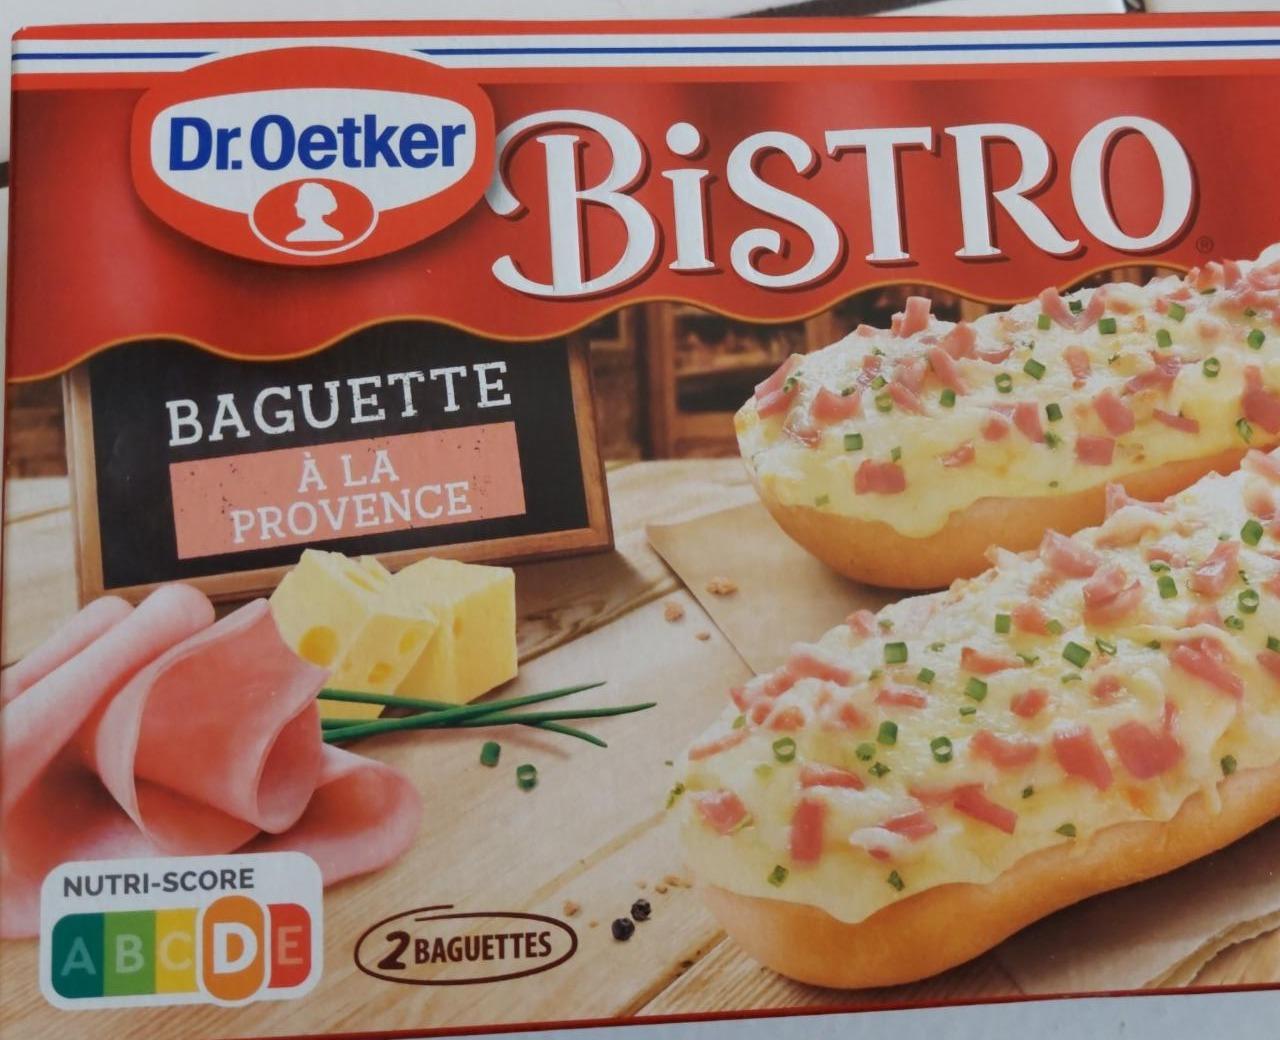 Provence kJ nutriční à Dr.Oetker la - hodnoty Baguette kalorie, Bistro a